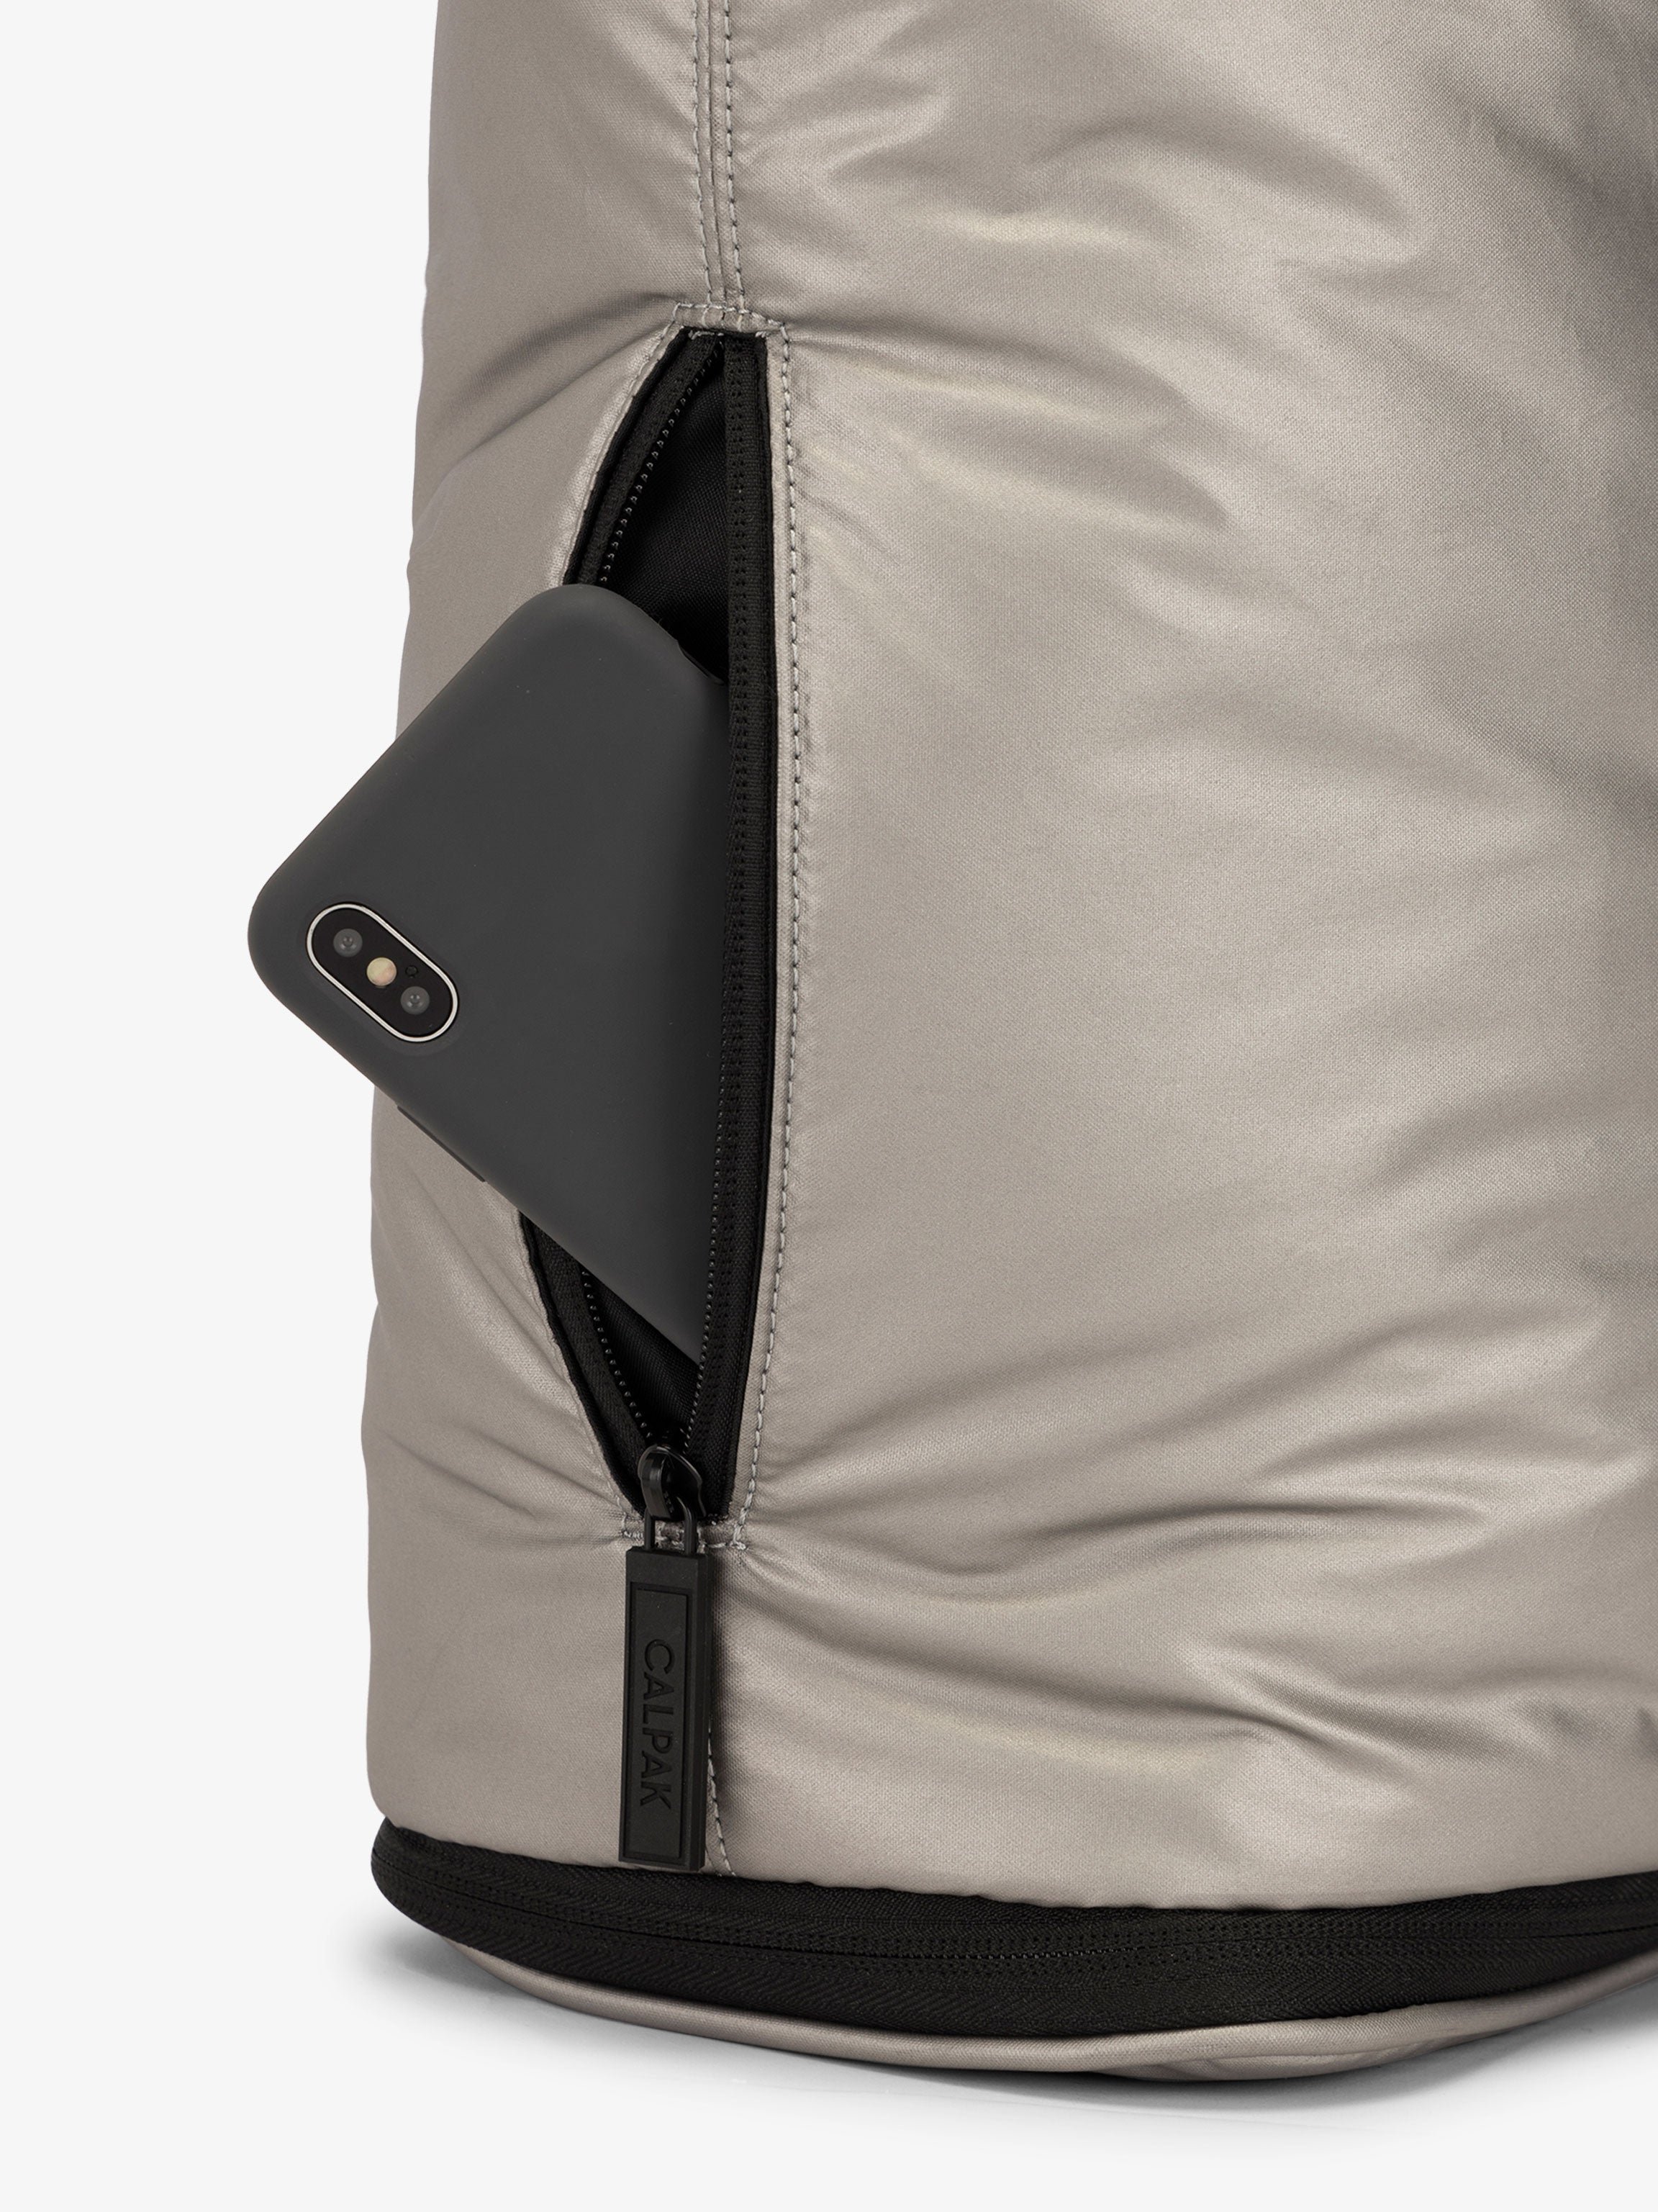 CALPAK Luka expandable laptop bag with hidden zippered pockets in metallic gray